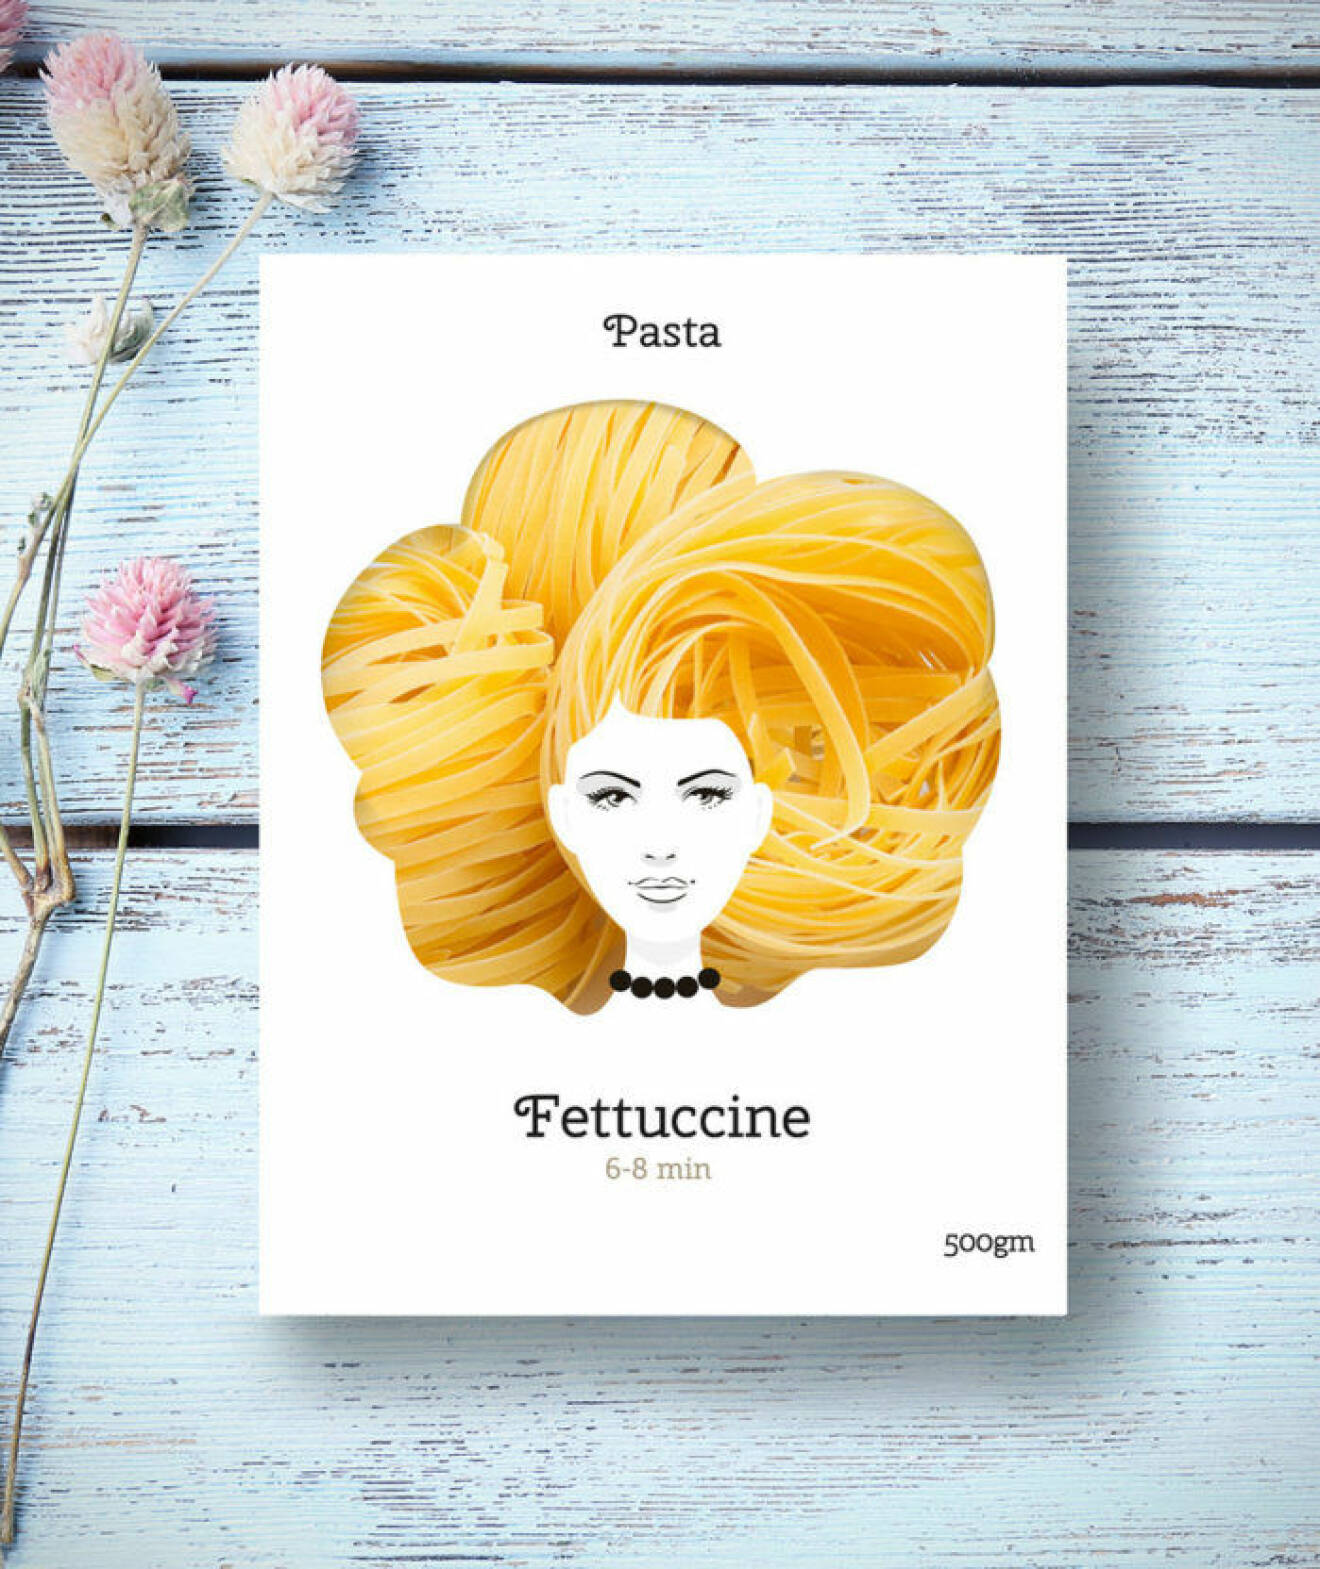 Good hair day pasta – fettuccine.